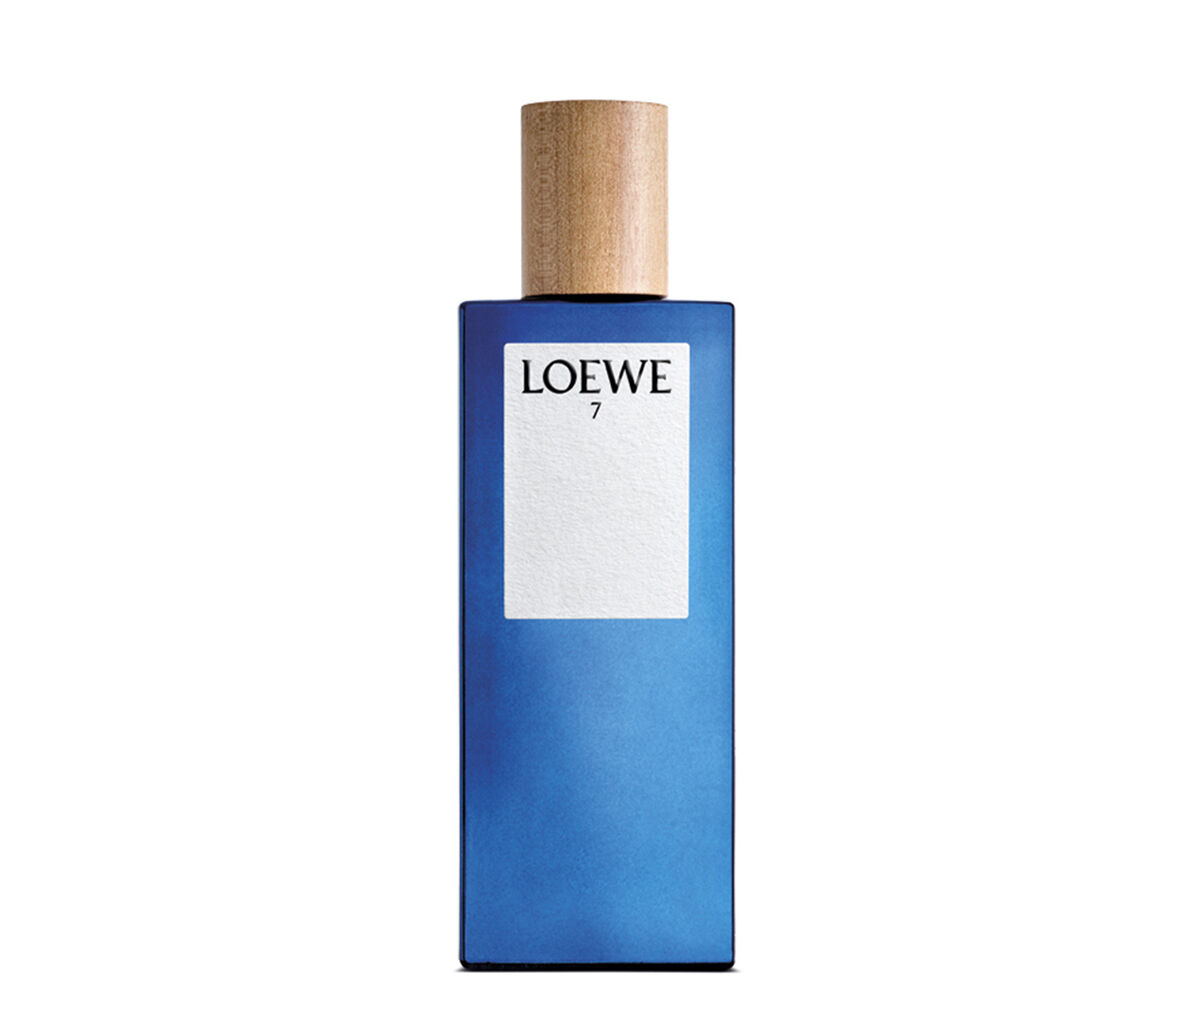 loewe 7 perfume price